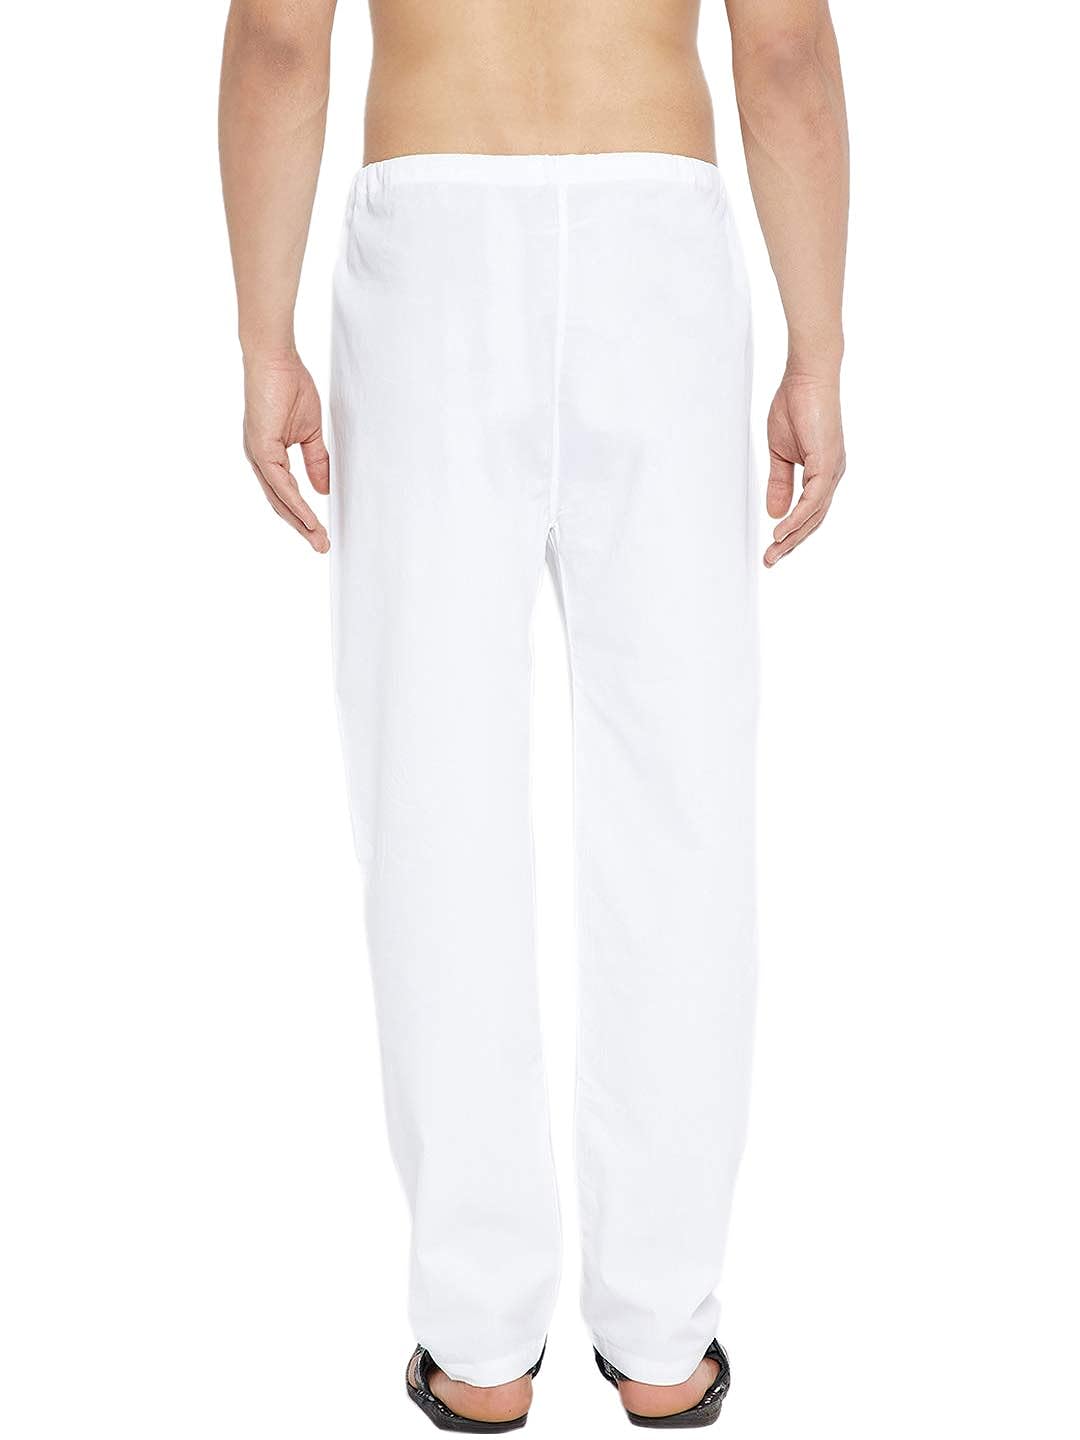 Vastraa Fusion Men's Cotton Solid Pajama